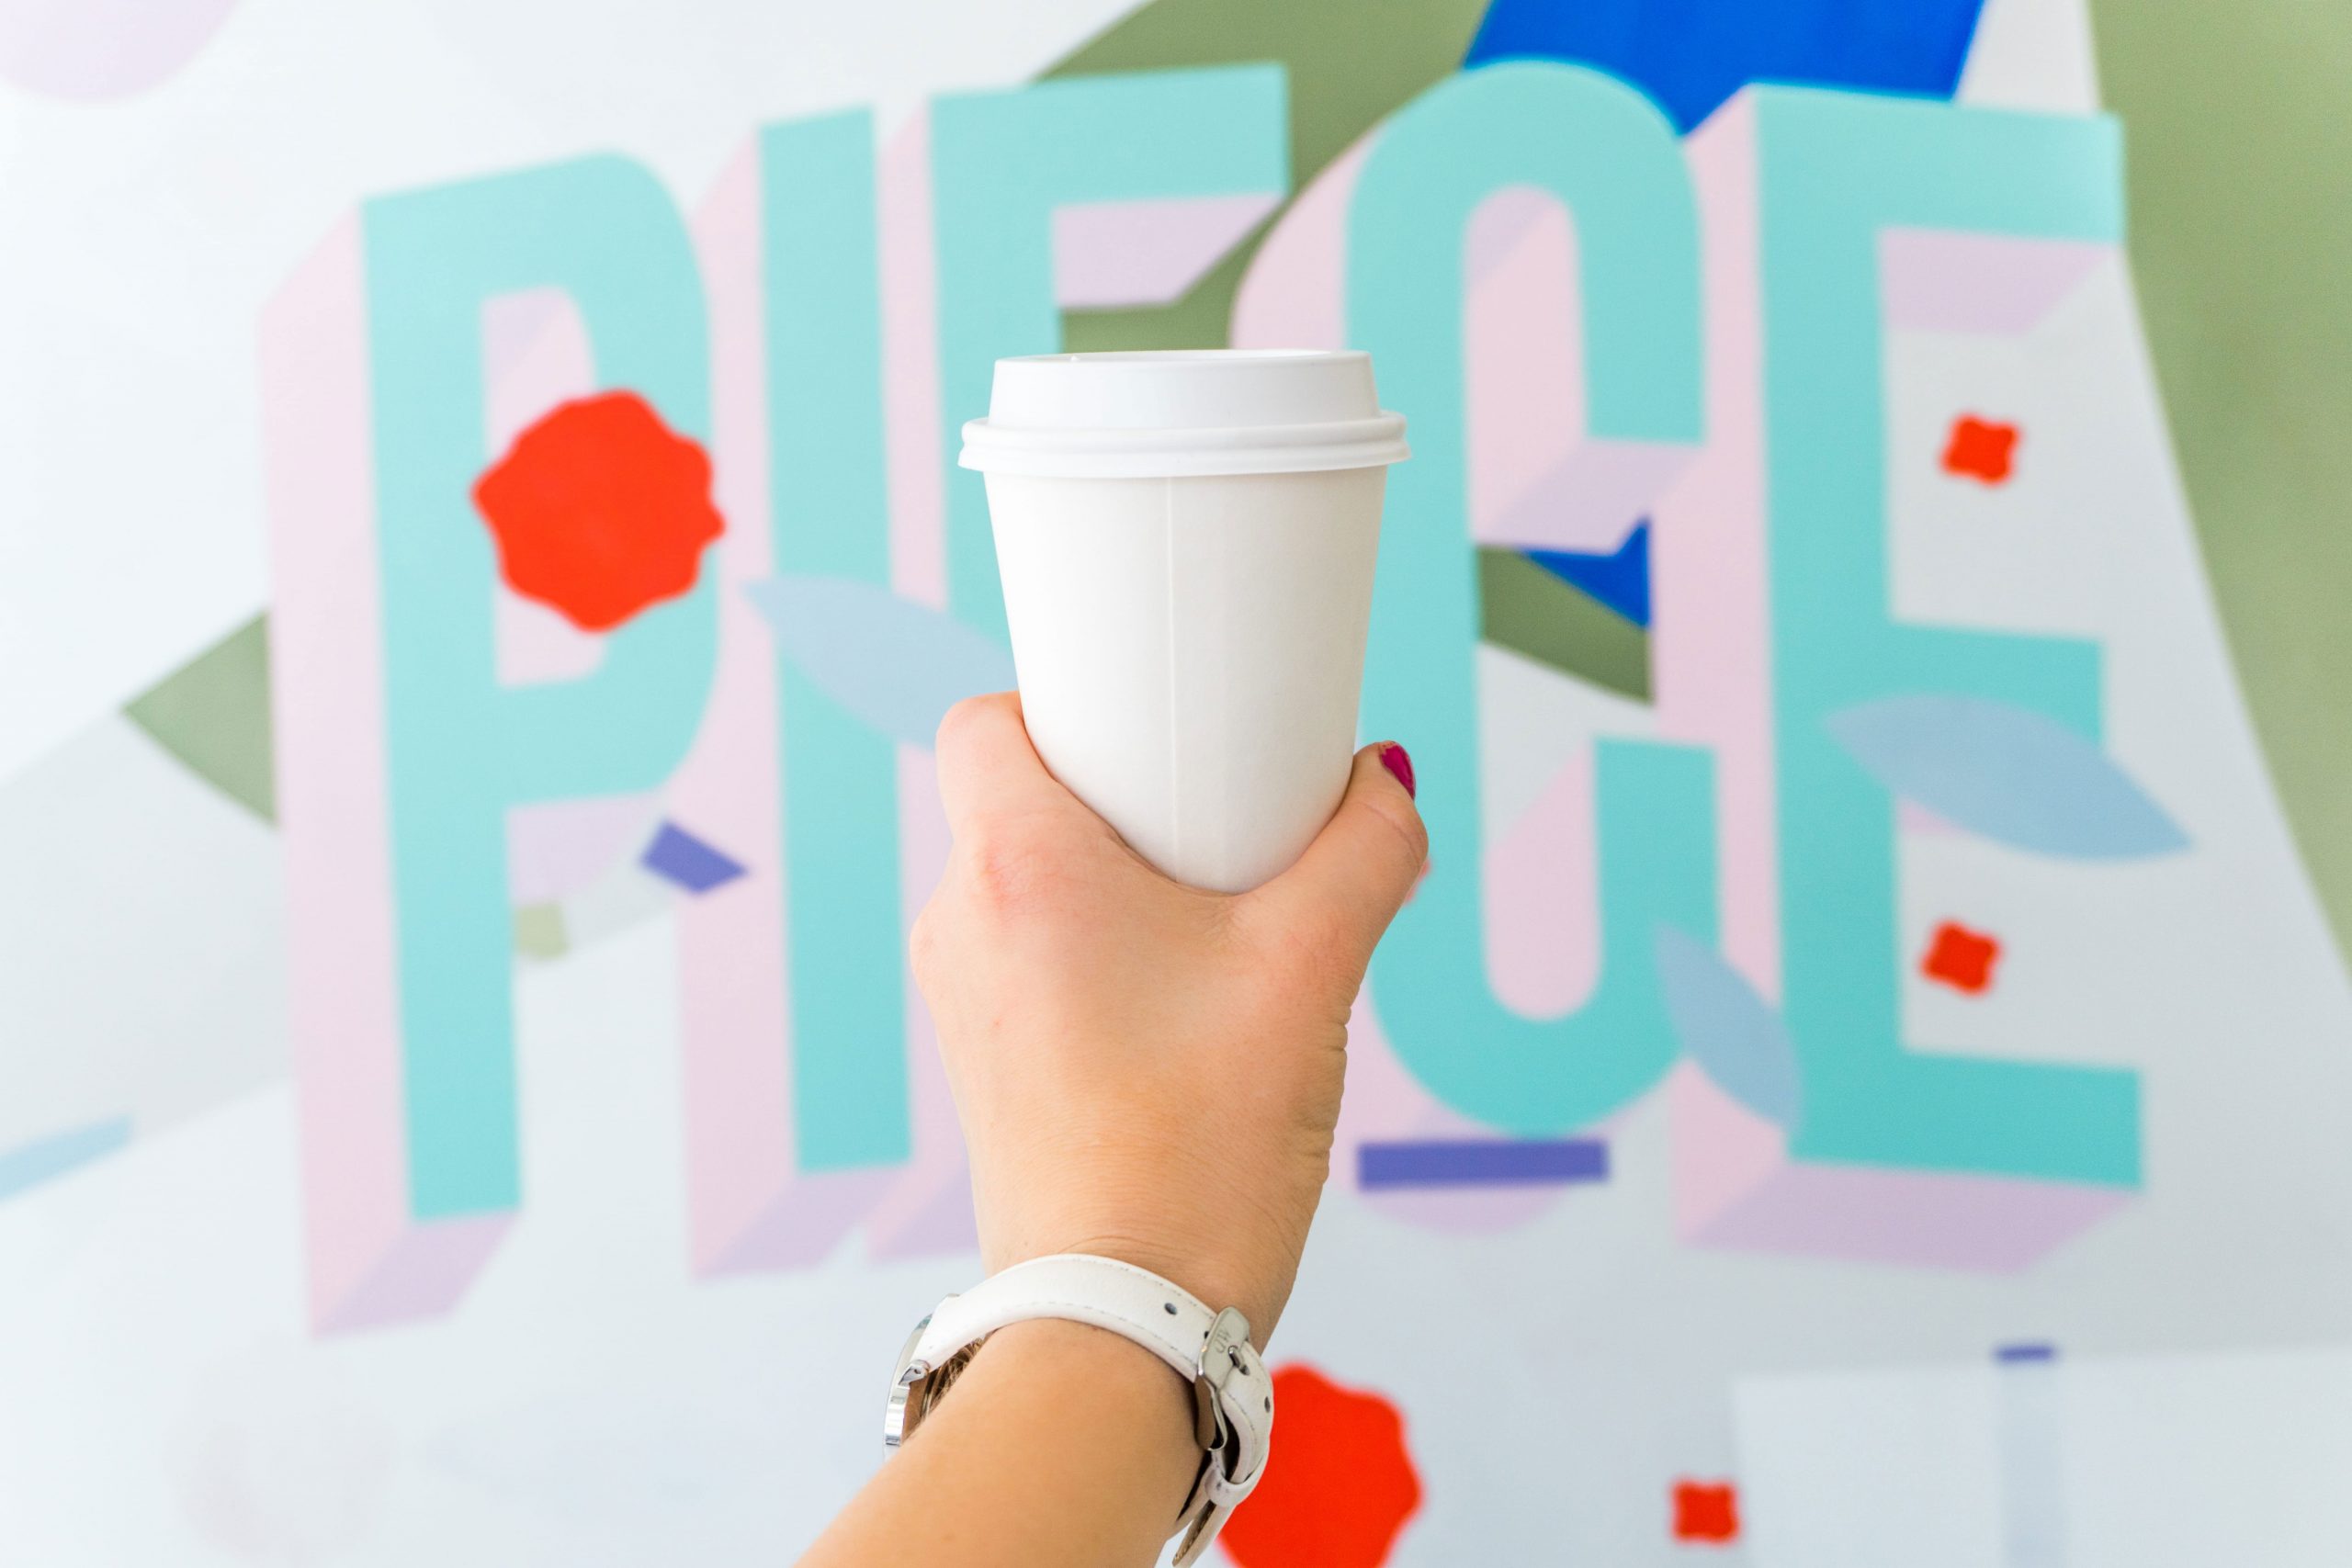 Coffee shop wallpaper, coffe cup, dallas